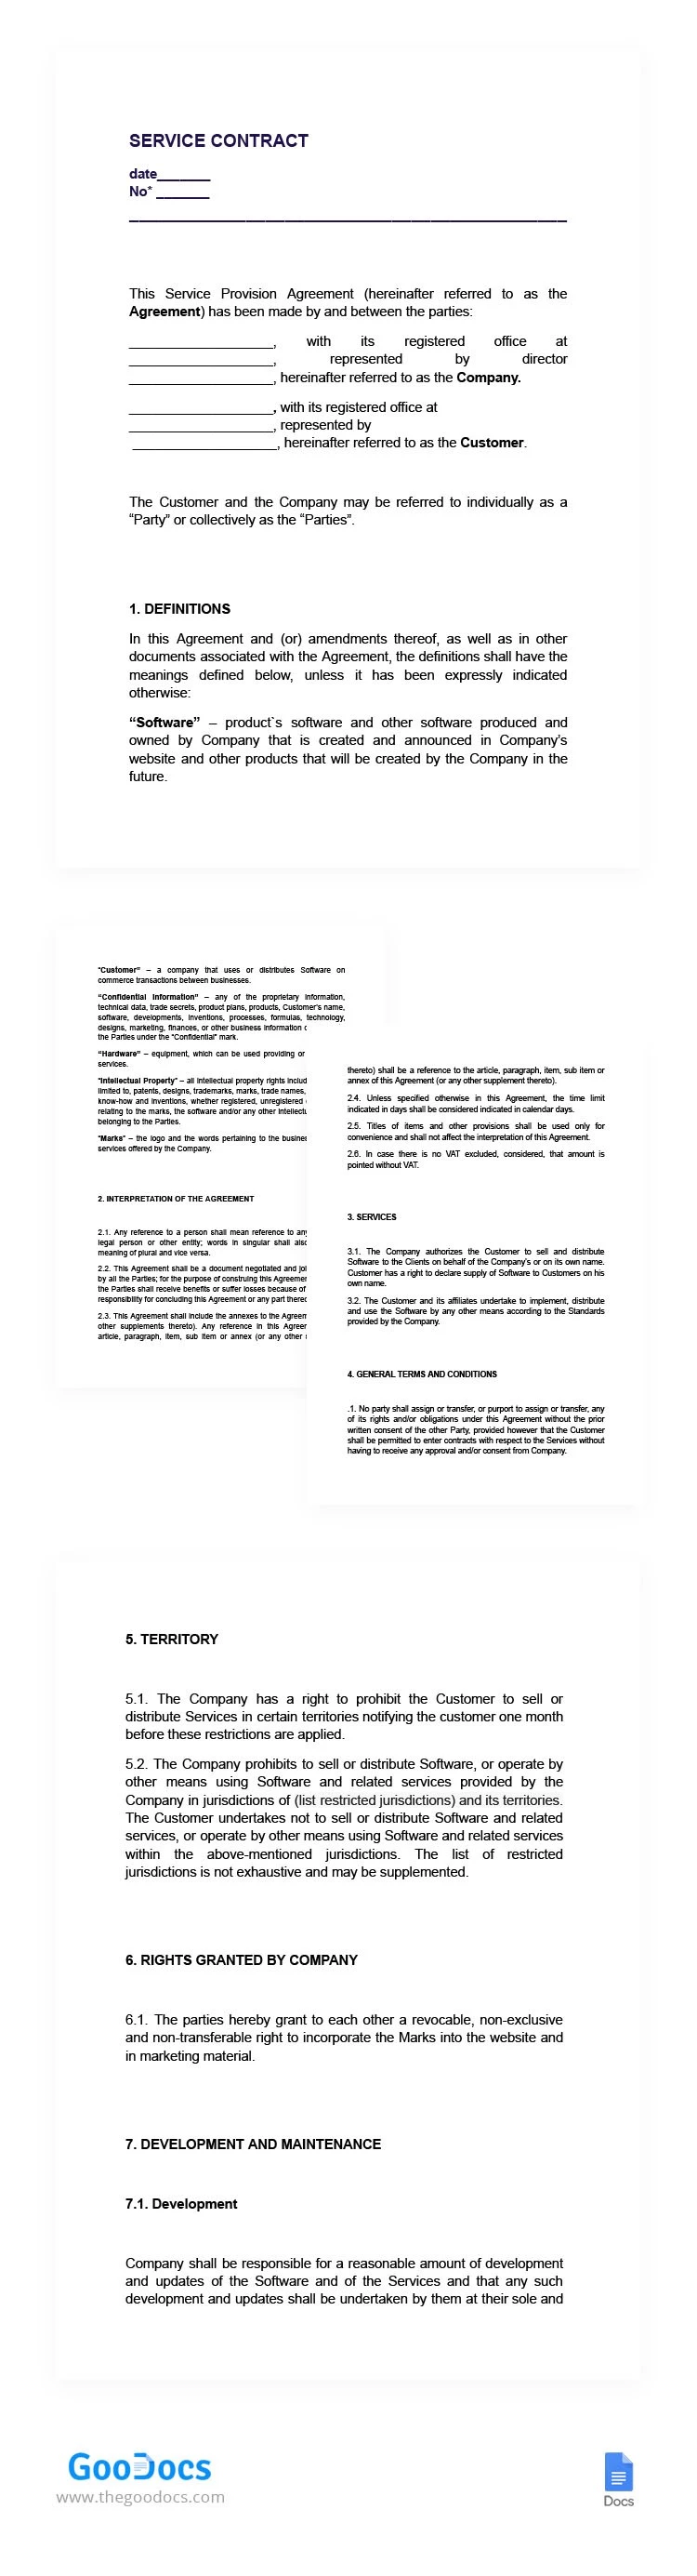 Contrato de Serviço - free Google Docs Template - 10065732